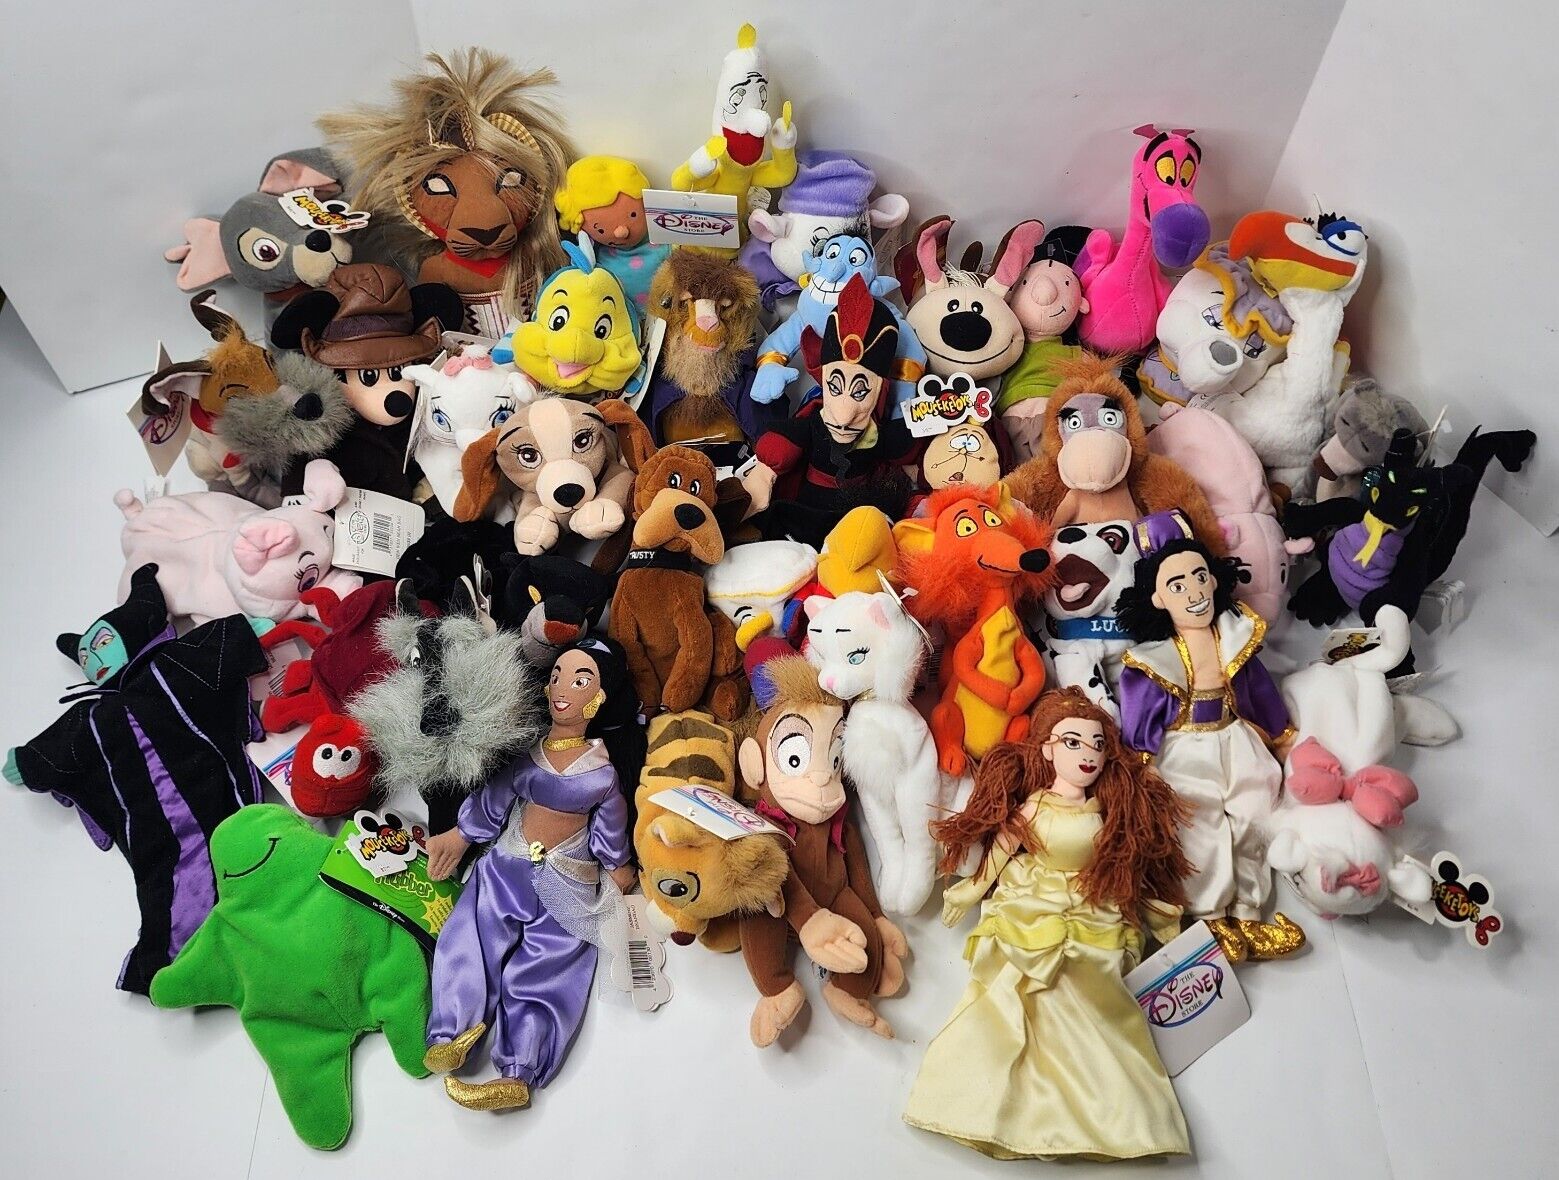 Lot of 41 Disney Bean Bag/Plush Toys - Mouseketoys/Disney Store